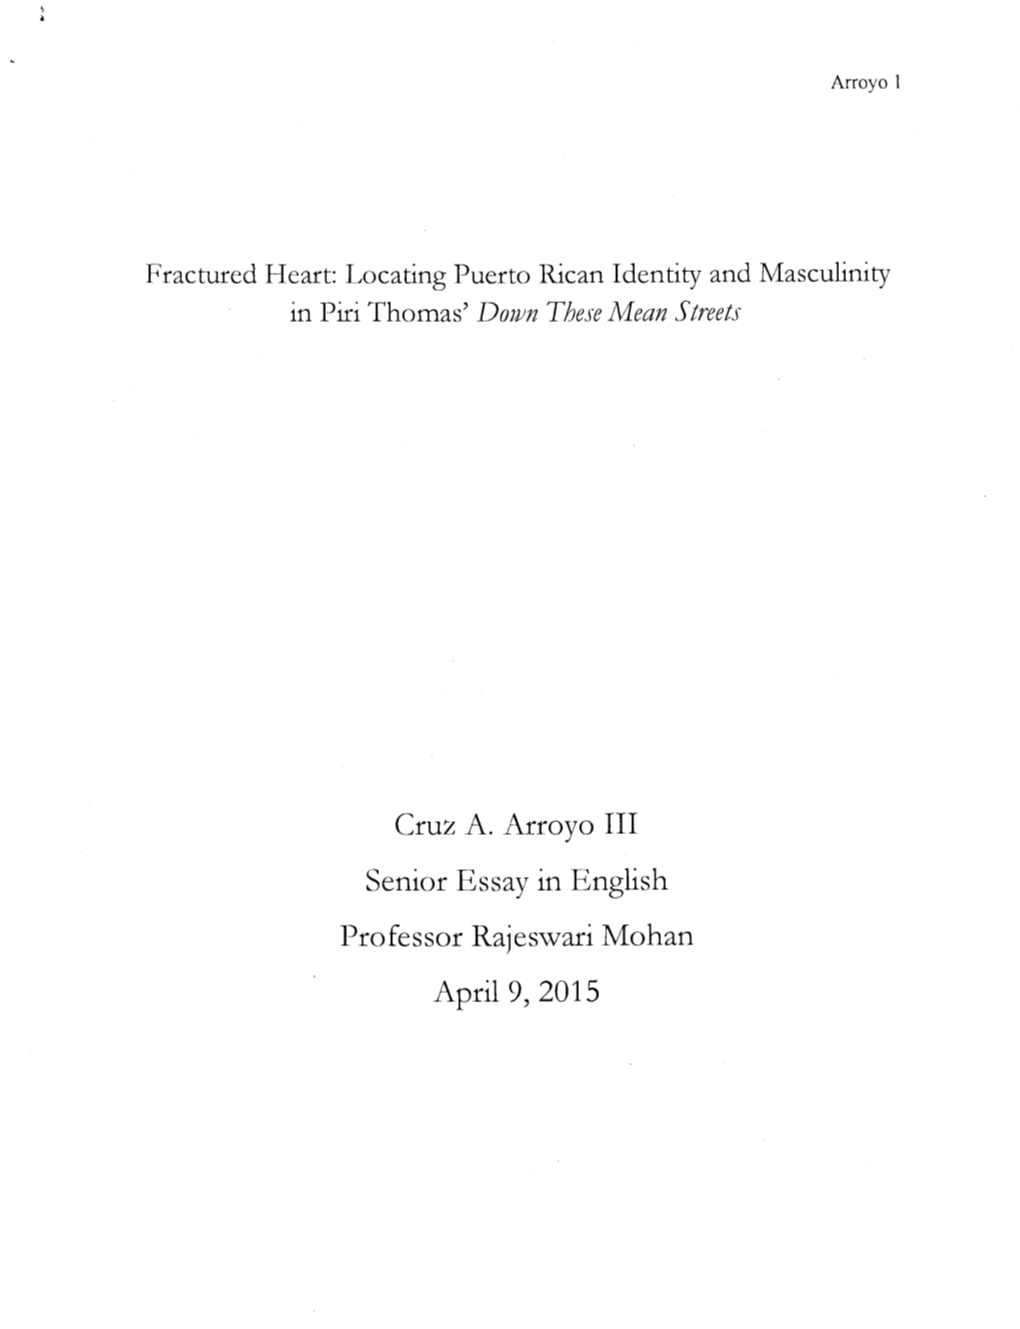 Cruz A. Arroyo III Senior Essay in English Professor Rajeswari Mohan April 9, 2015 Arroyo 2